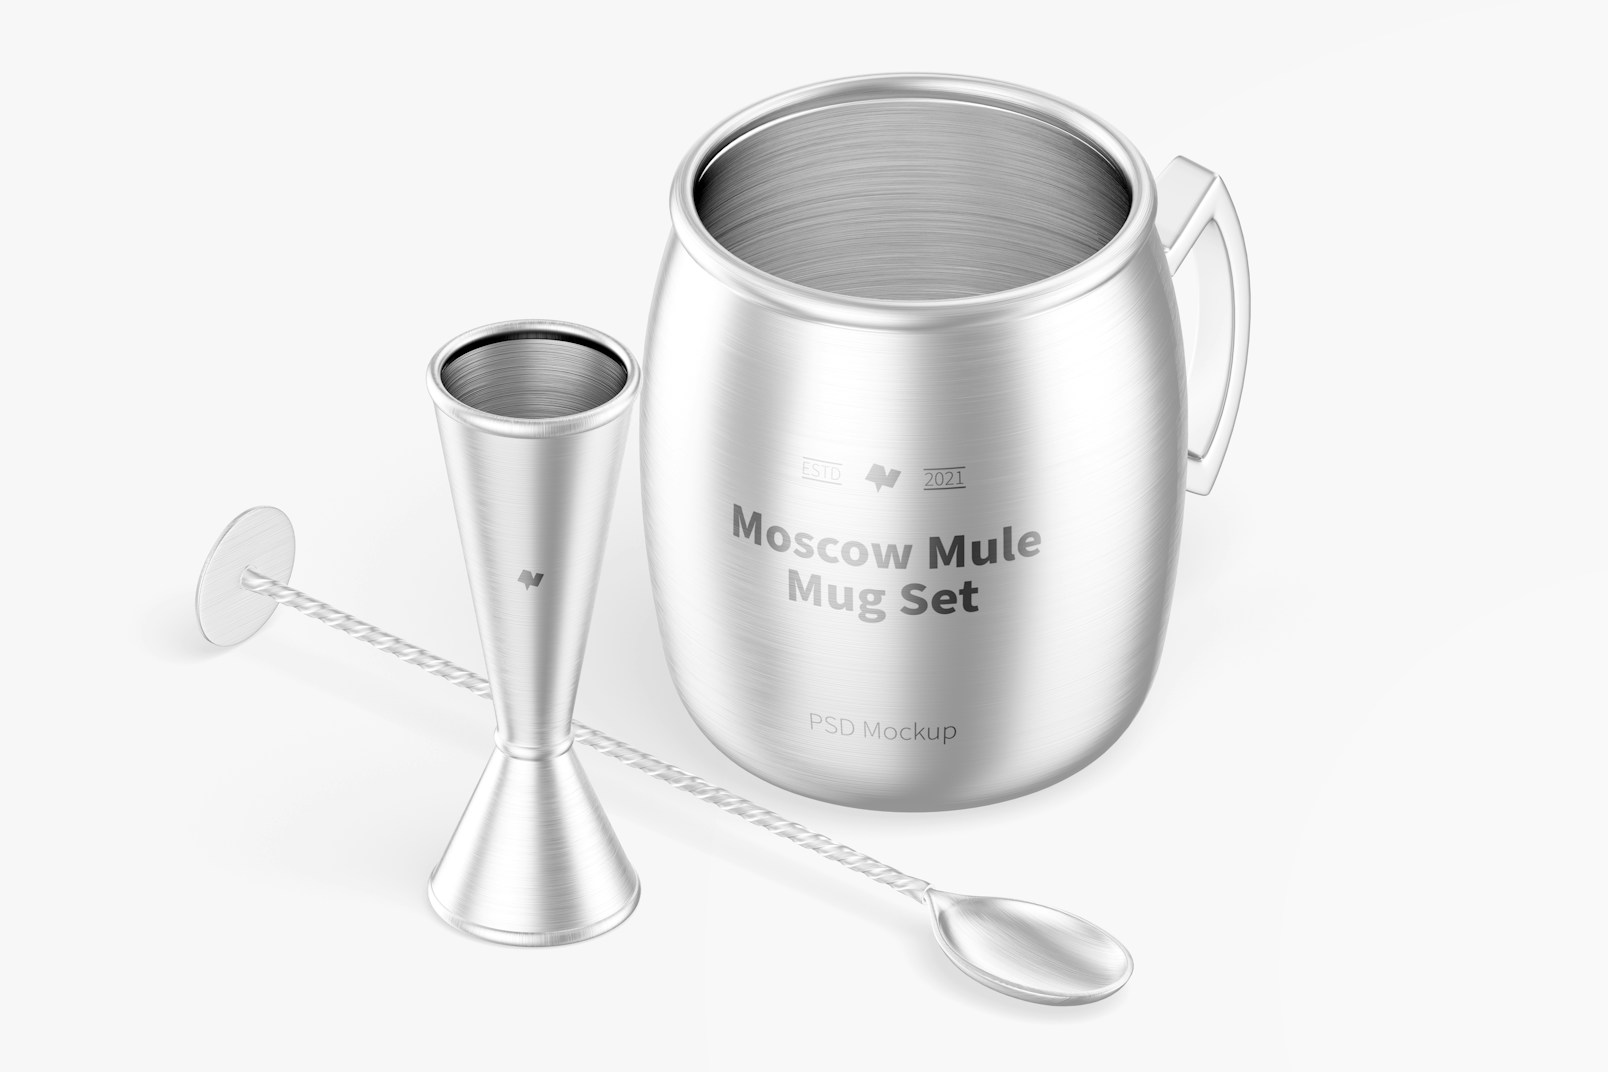 Moscow Mule Mug Set Mockup, Isometric View